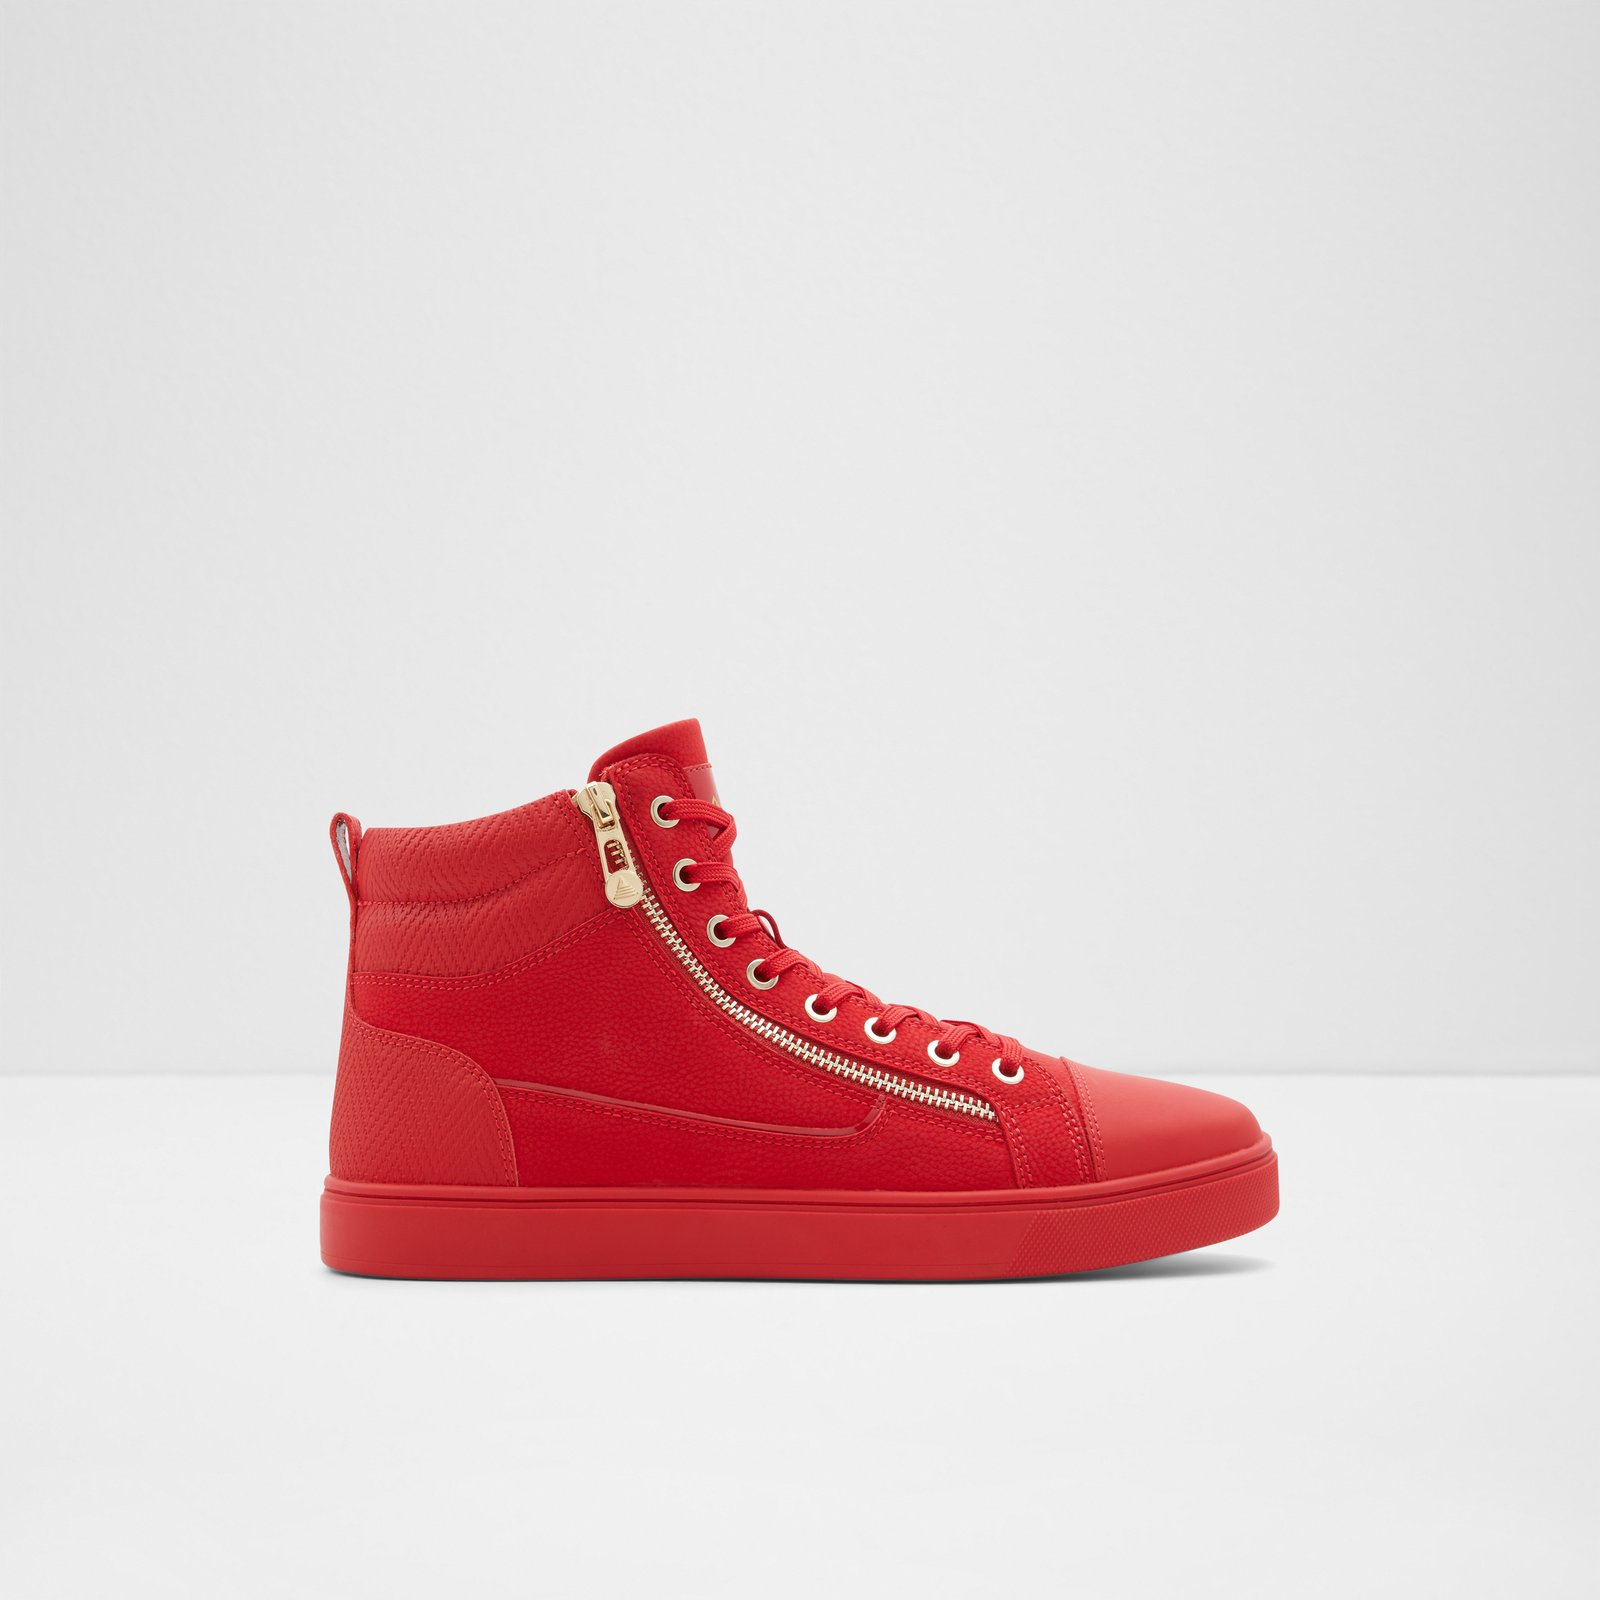 Aldo Blood Red Leather Sneakers | eBay